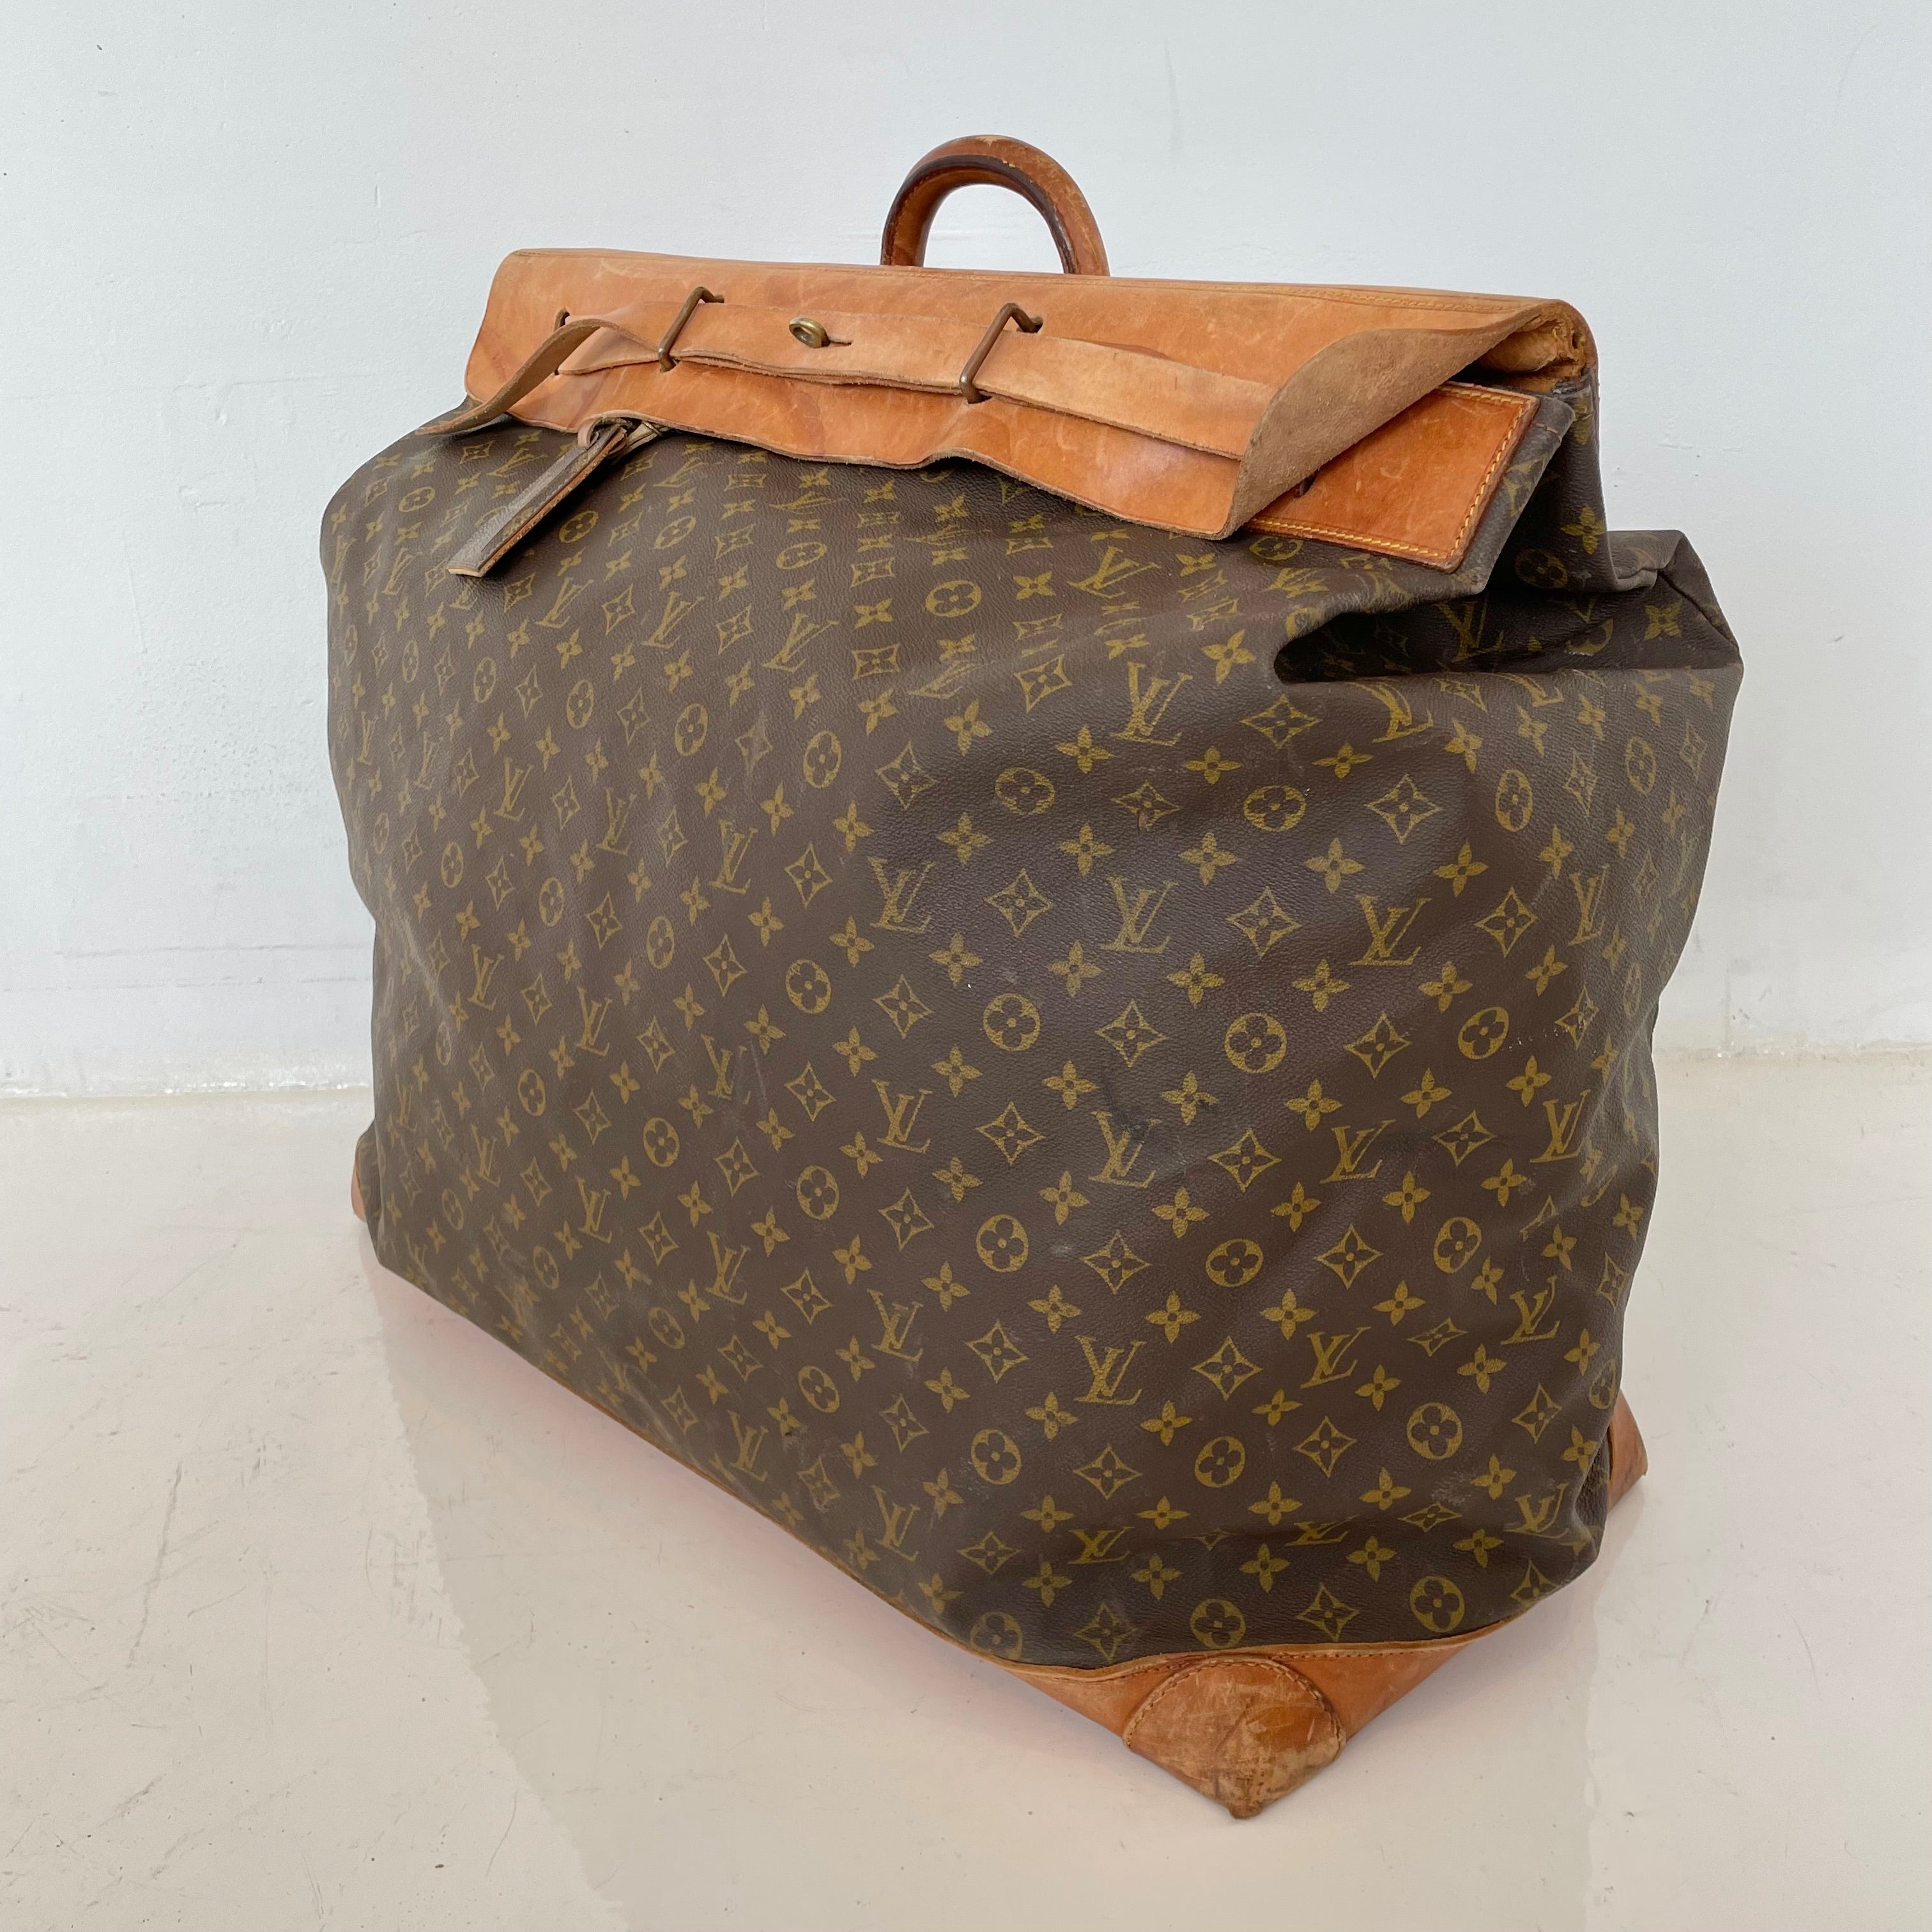 Vintage Louis Vuitton monogram travel bag steamer